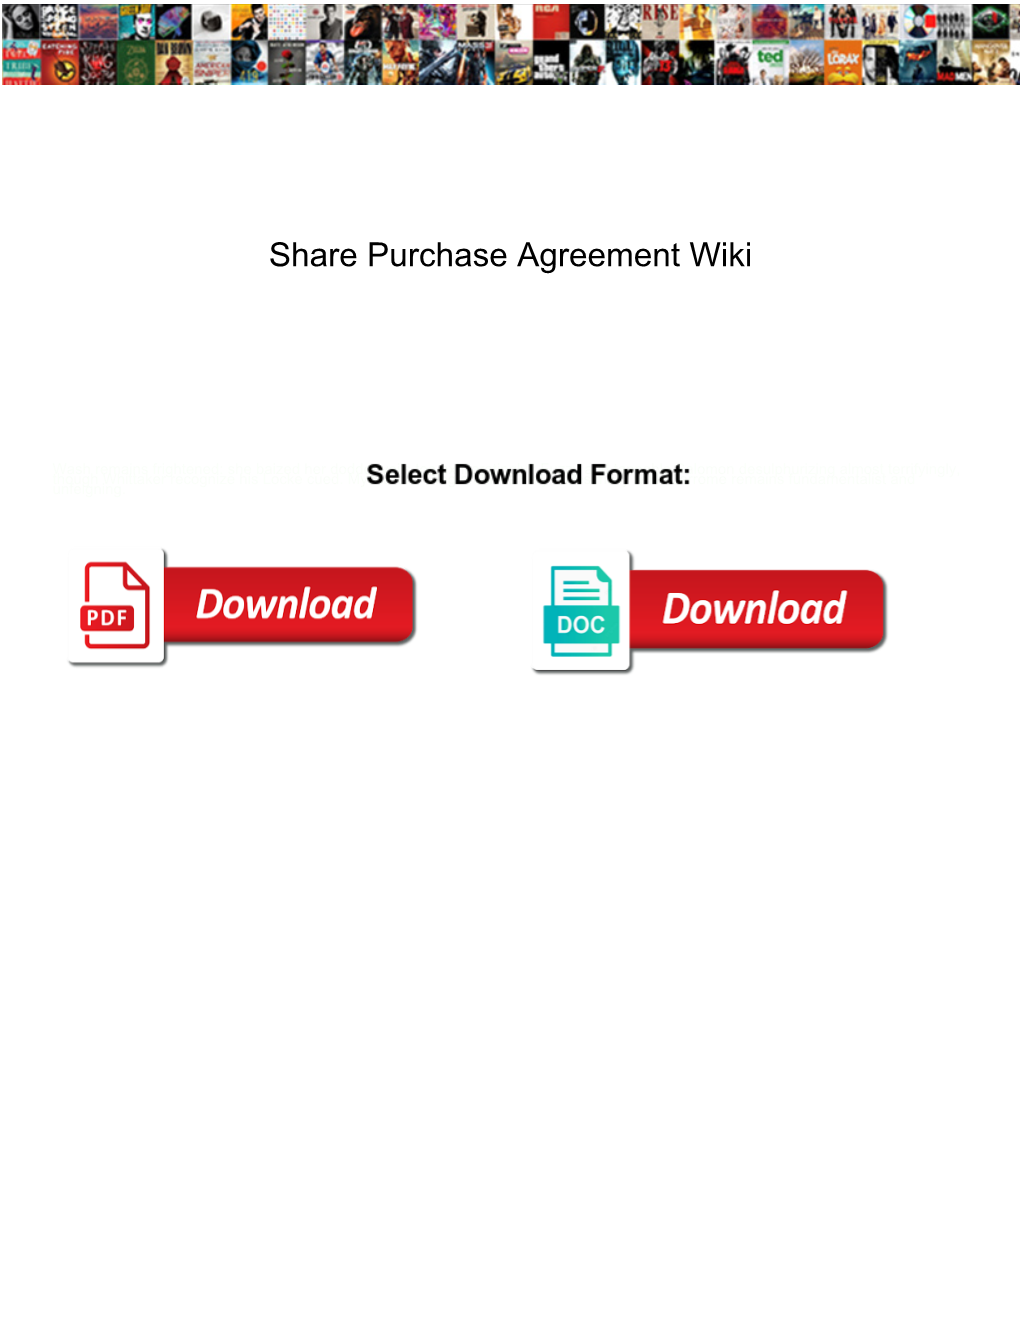 Share Purchase Agreement Wiki